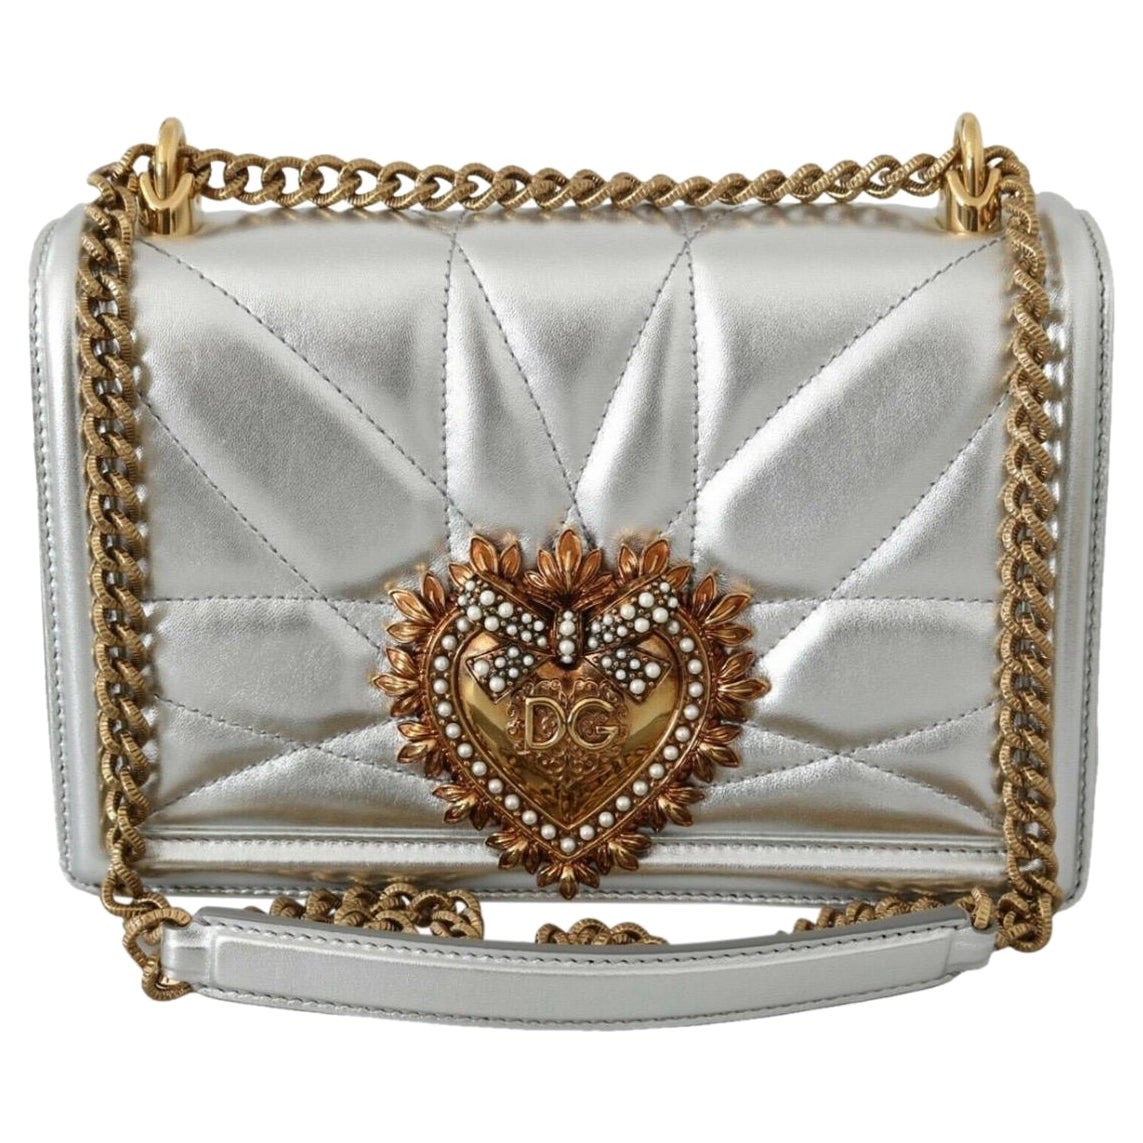 Dolce & Gabbana silver leather devotion bag